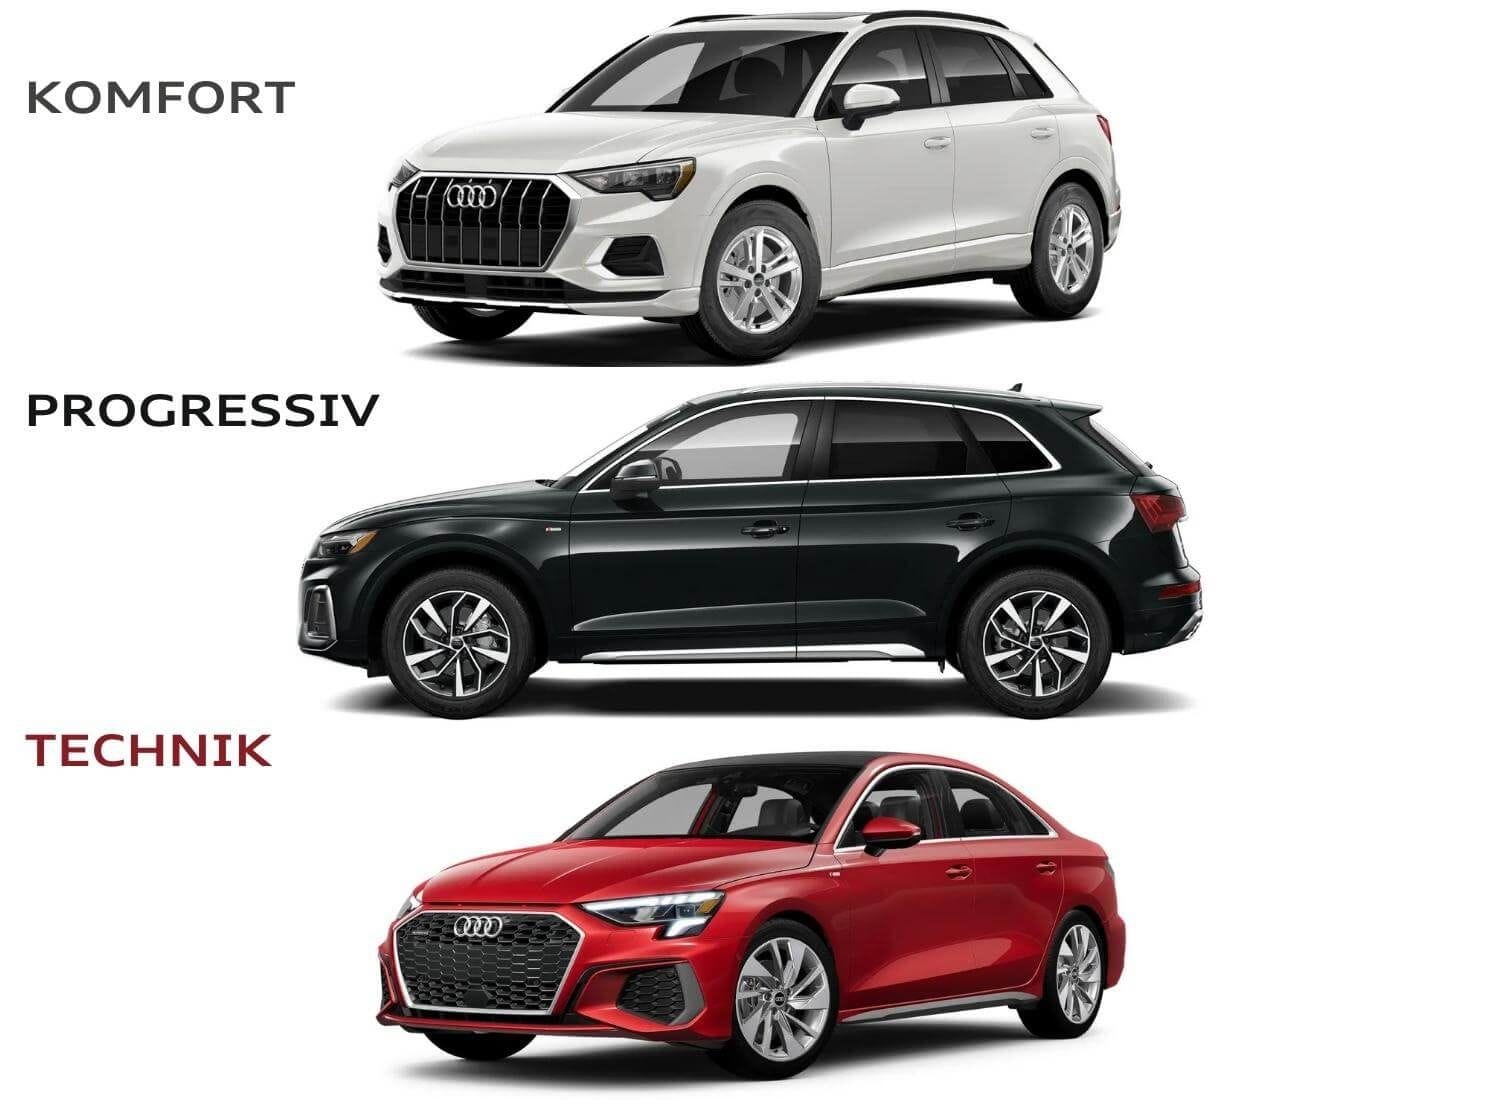 Audi Komfort vs Progressiv vs Technik: quel sont les différences?